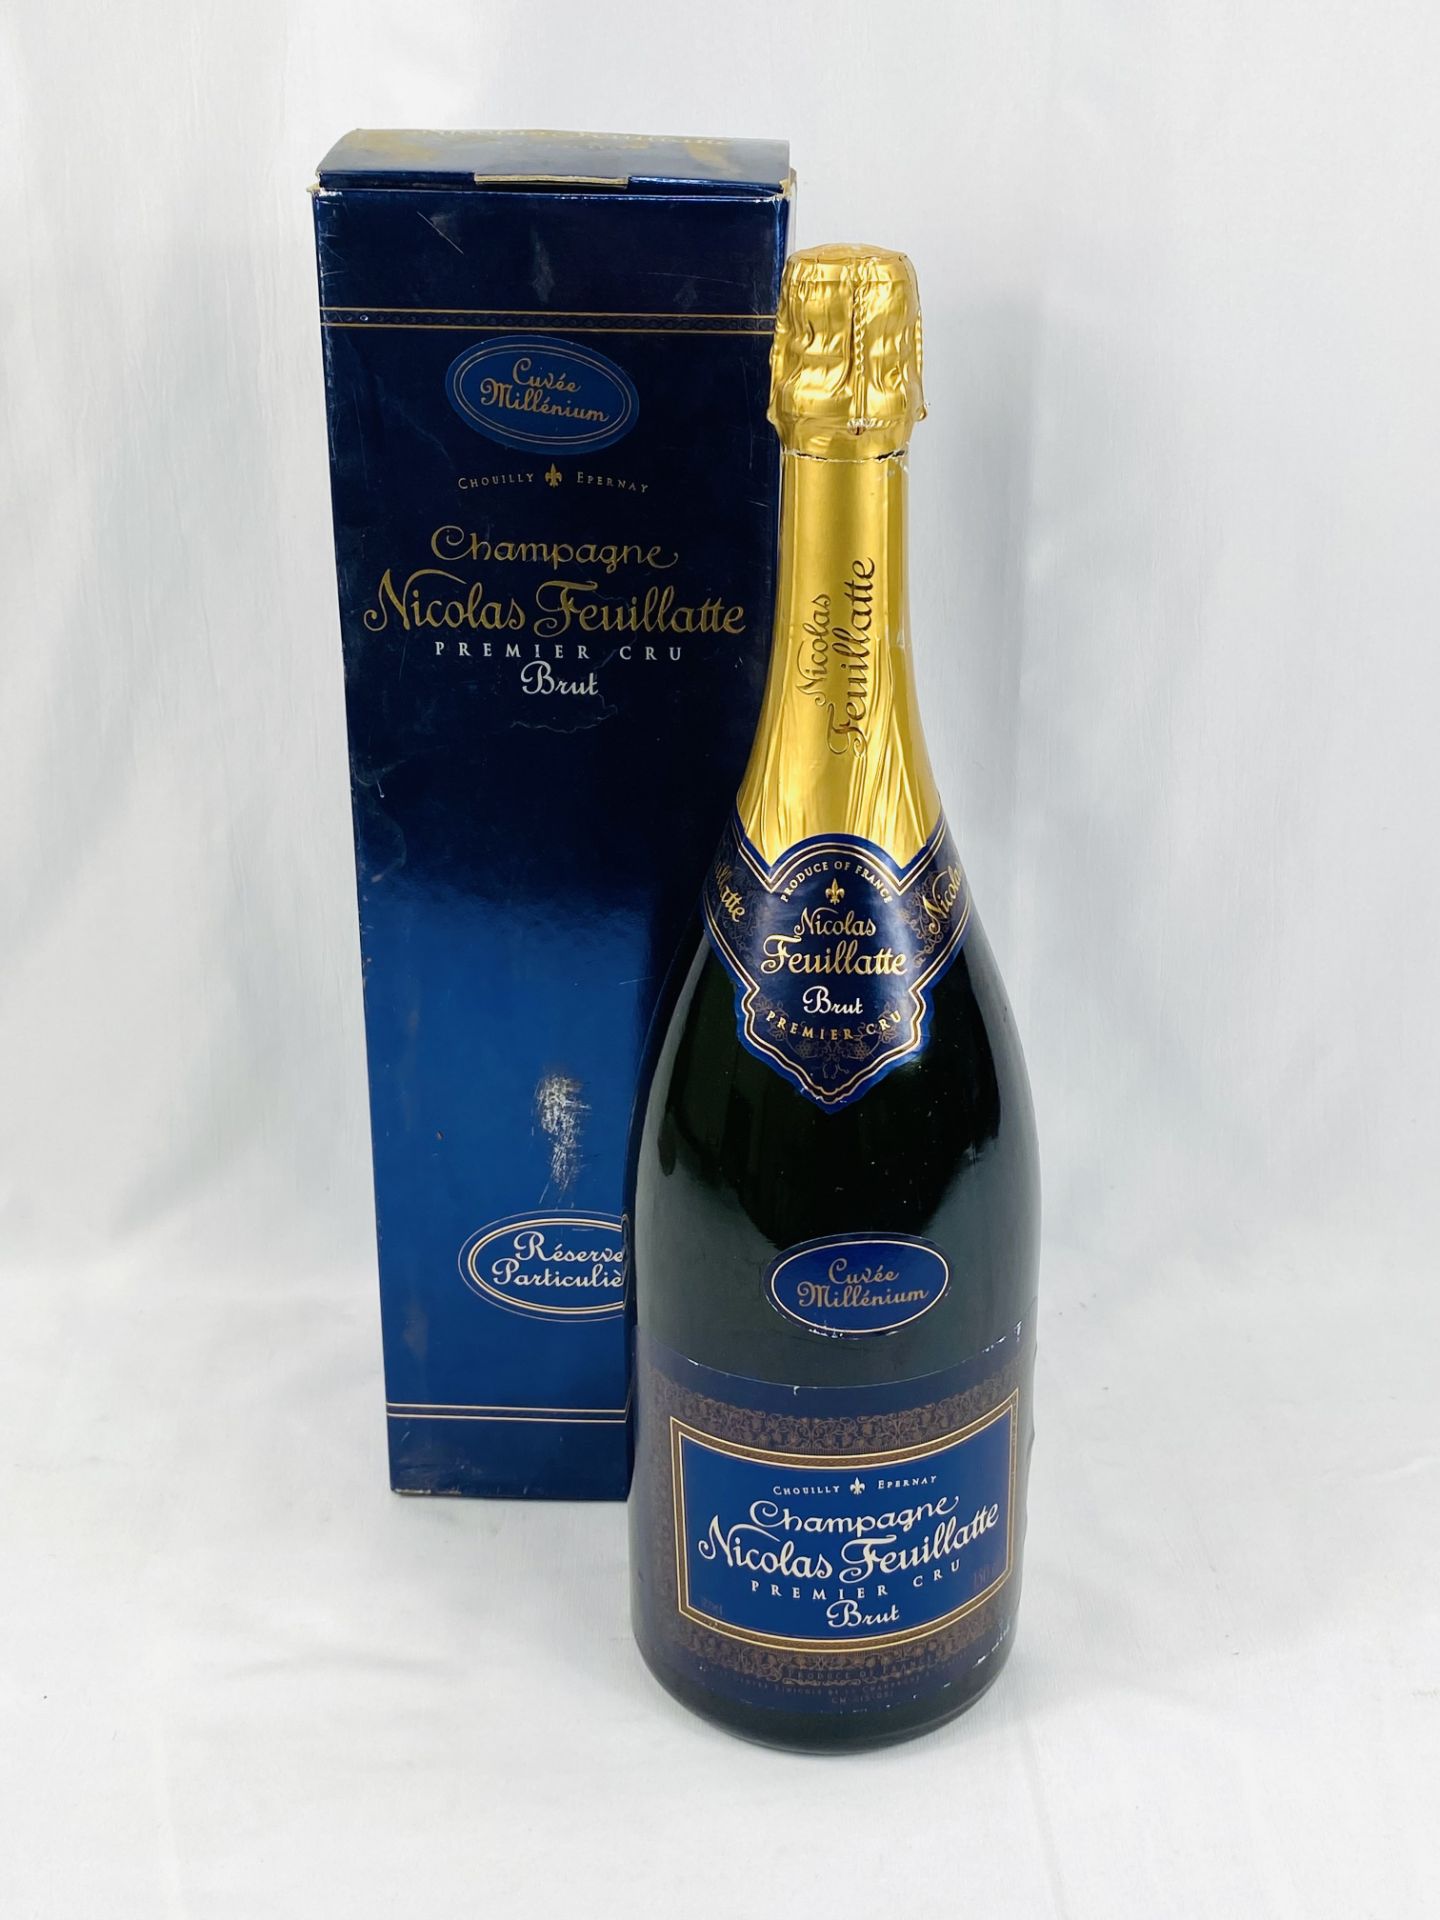 Nicolas Feuillatte Premier cru champagne - Image 4 of 4